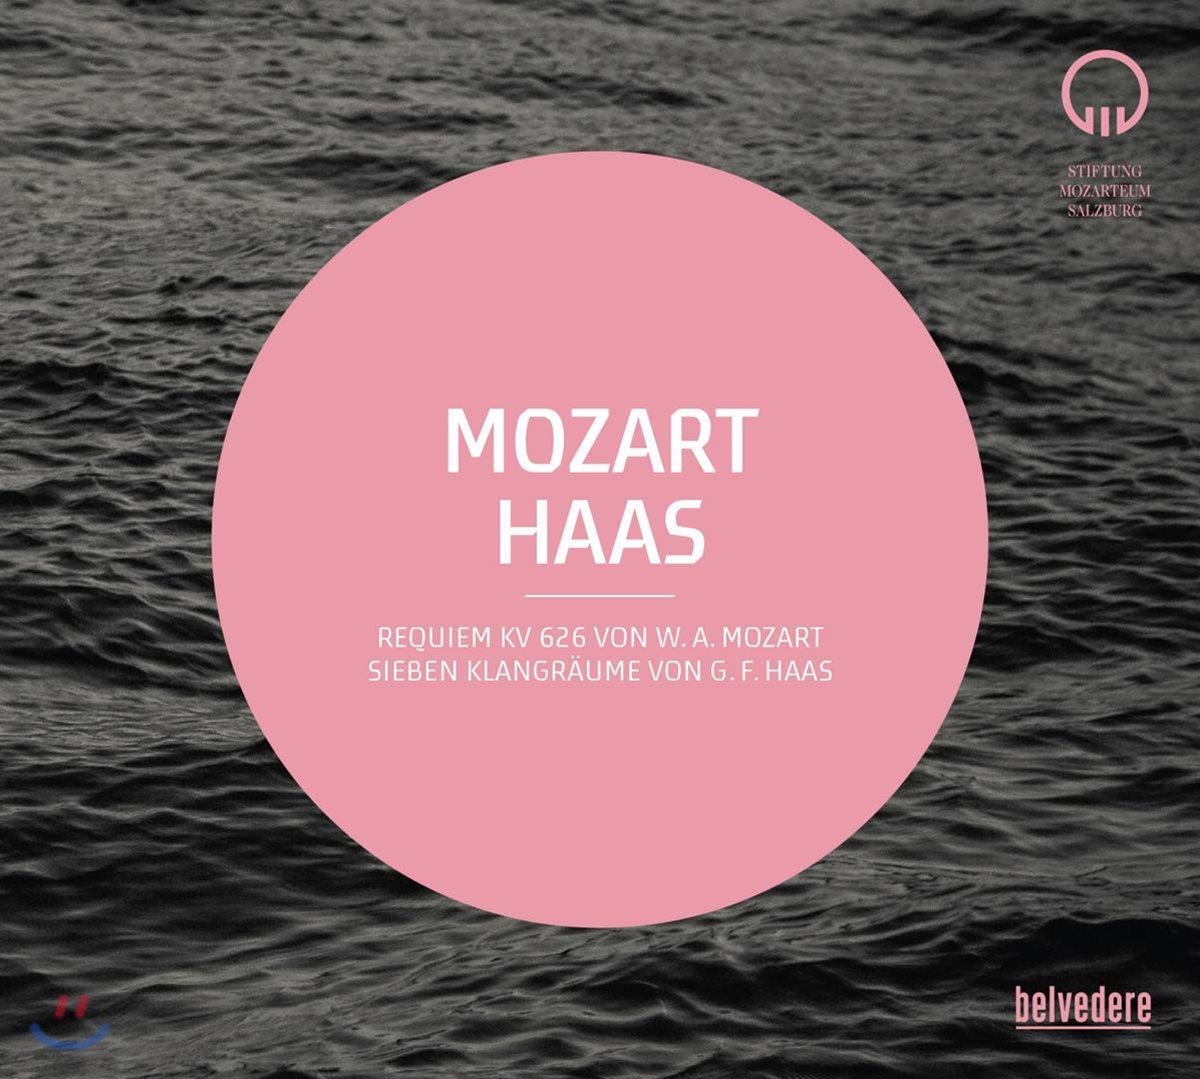 Ivor Bolton 모차르트: 레퀴엠 / 게오르그 프리드리히 하스: 일곱 개의 소리 공간 (Mozart: Requiem K.626)